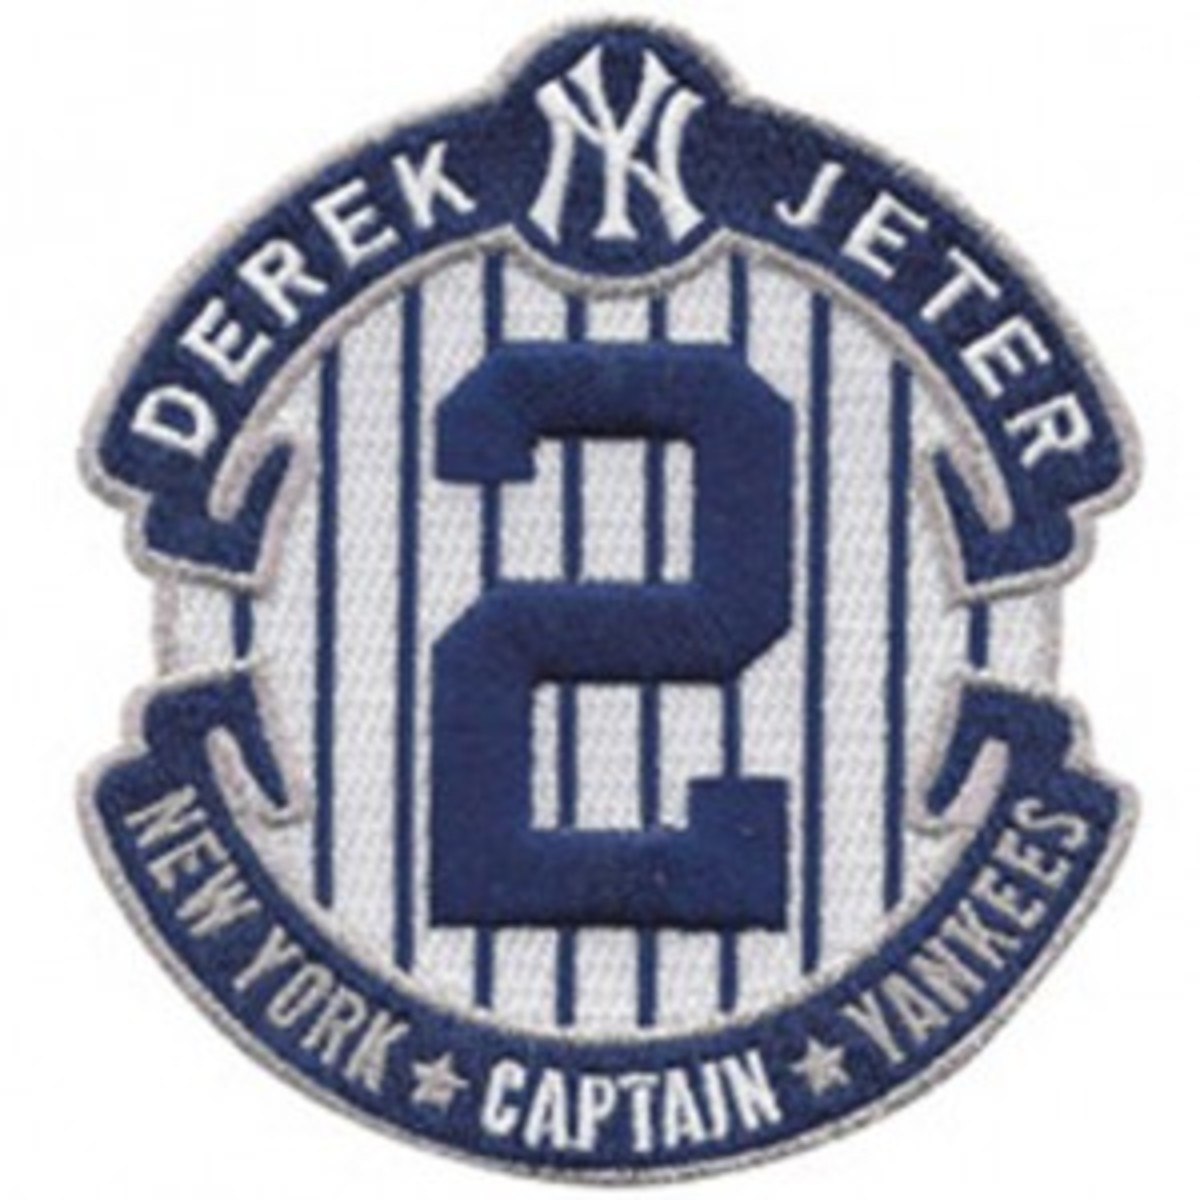 Derek Jeter Autographed 1996 World Series Commemorative Cleats